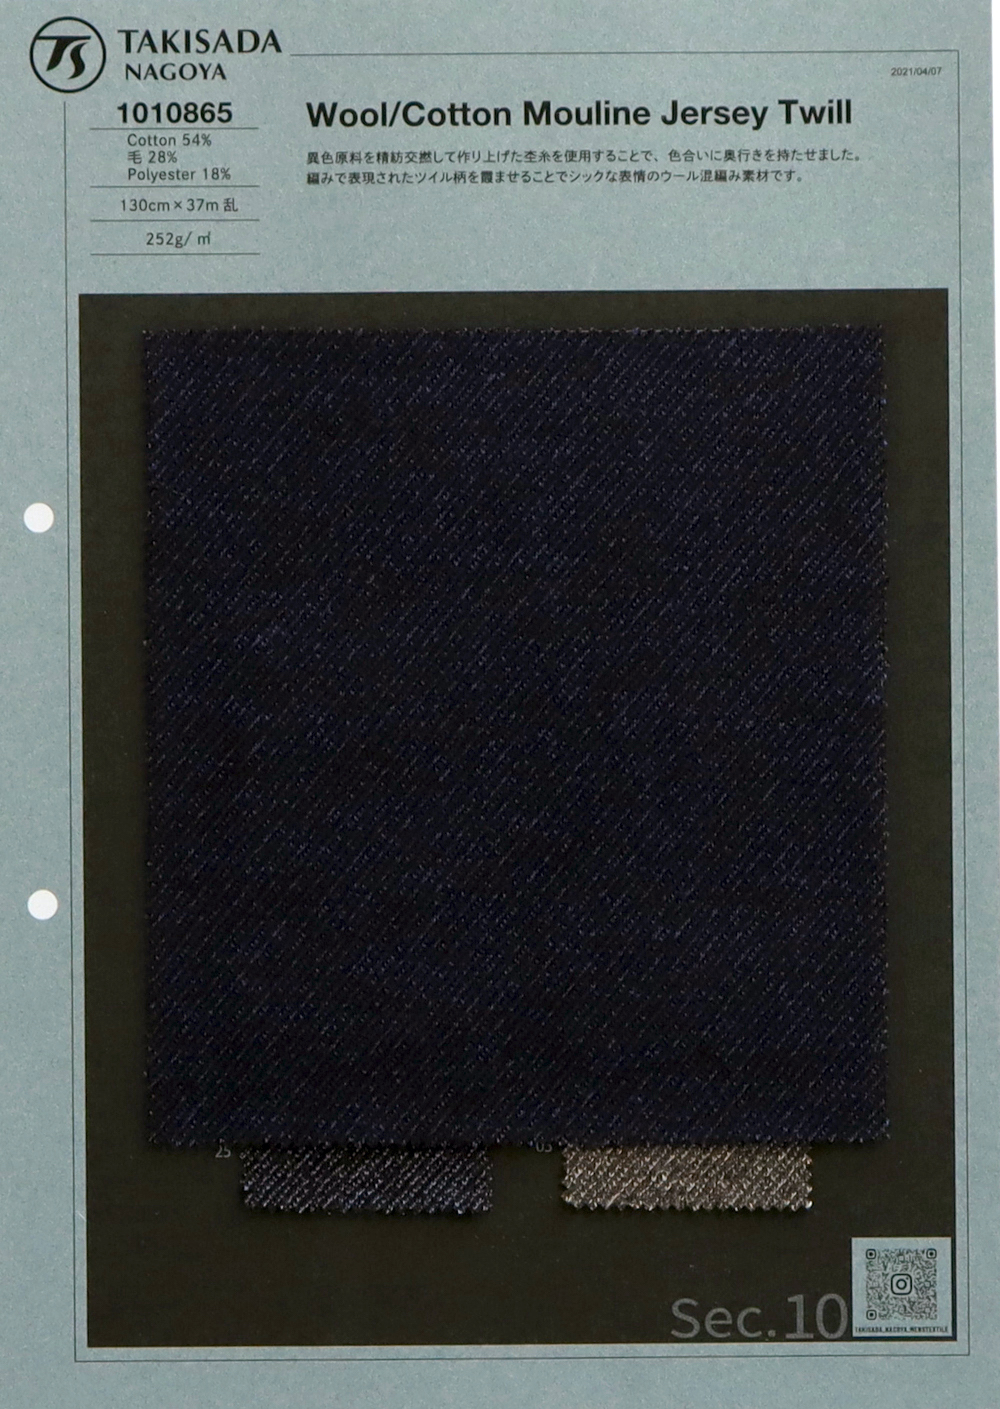 1010865 Melange-Jersey-Twill-Muster Aus Wolle/Baumwolle[Textilgewebe] Takisada Nagoya